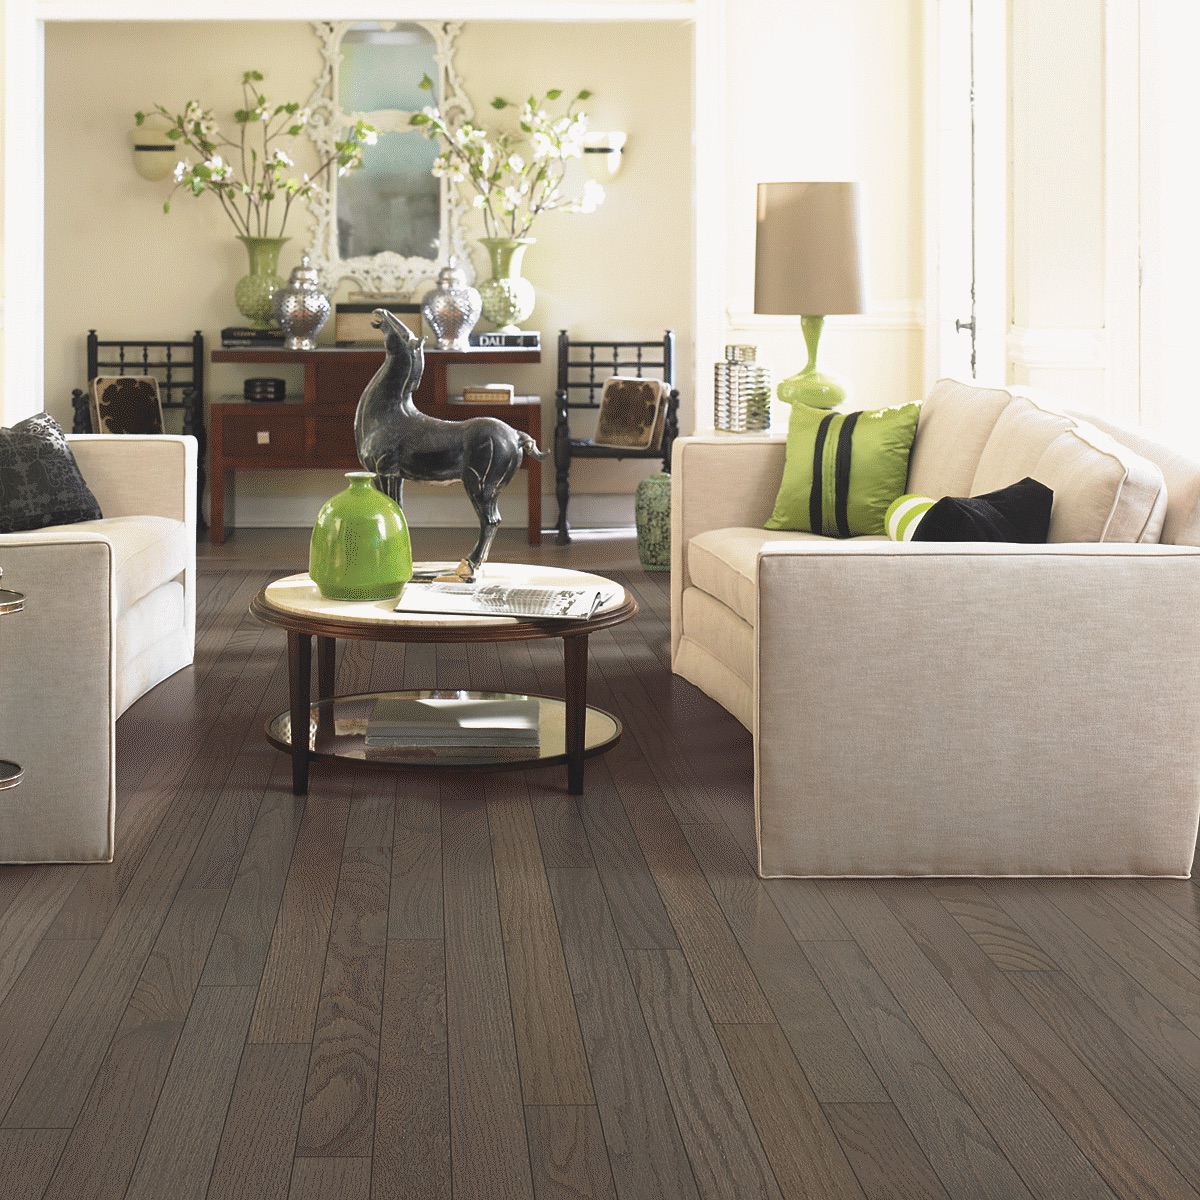 Choosing the Right Wood Flooring